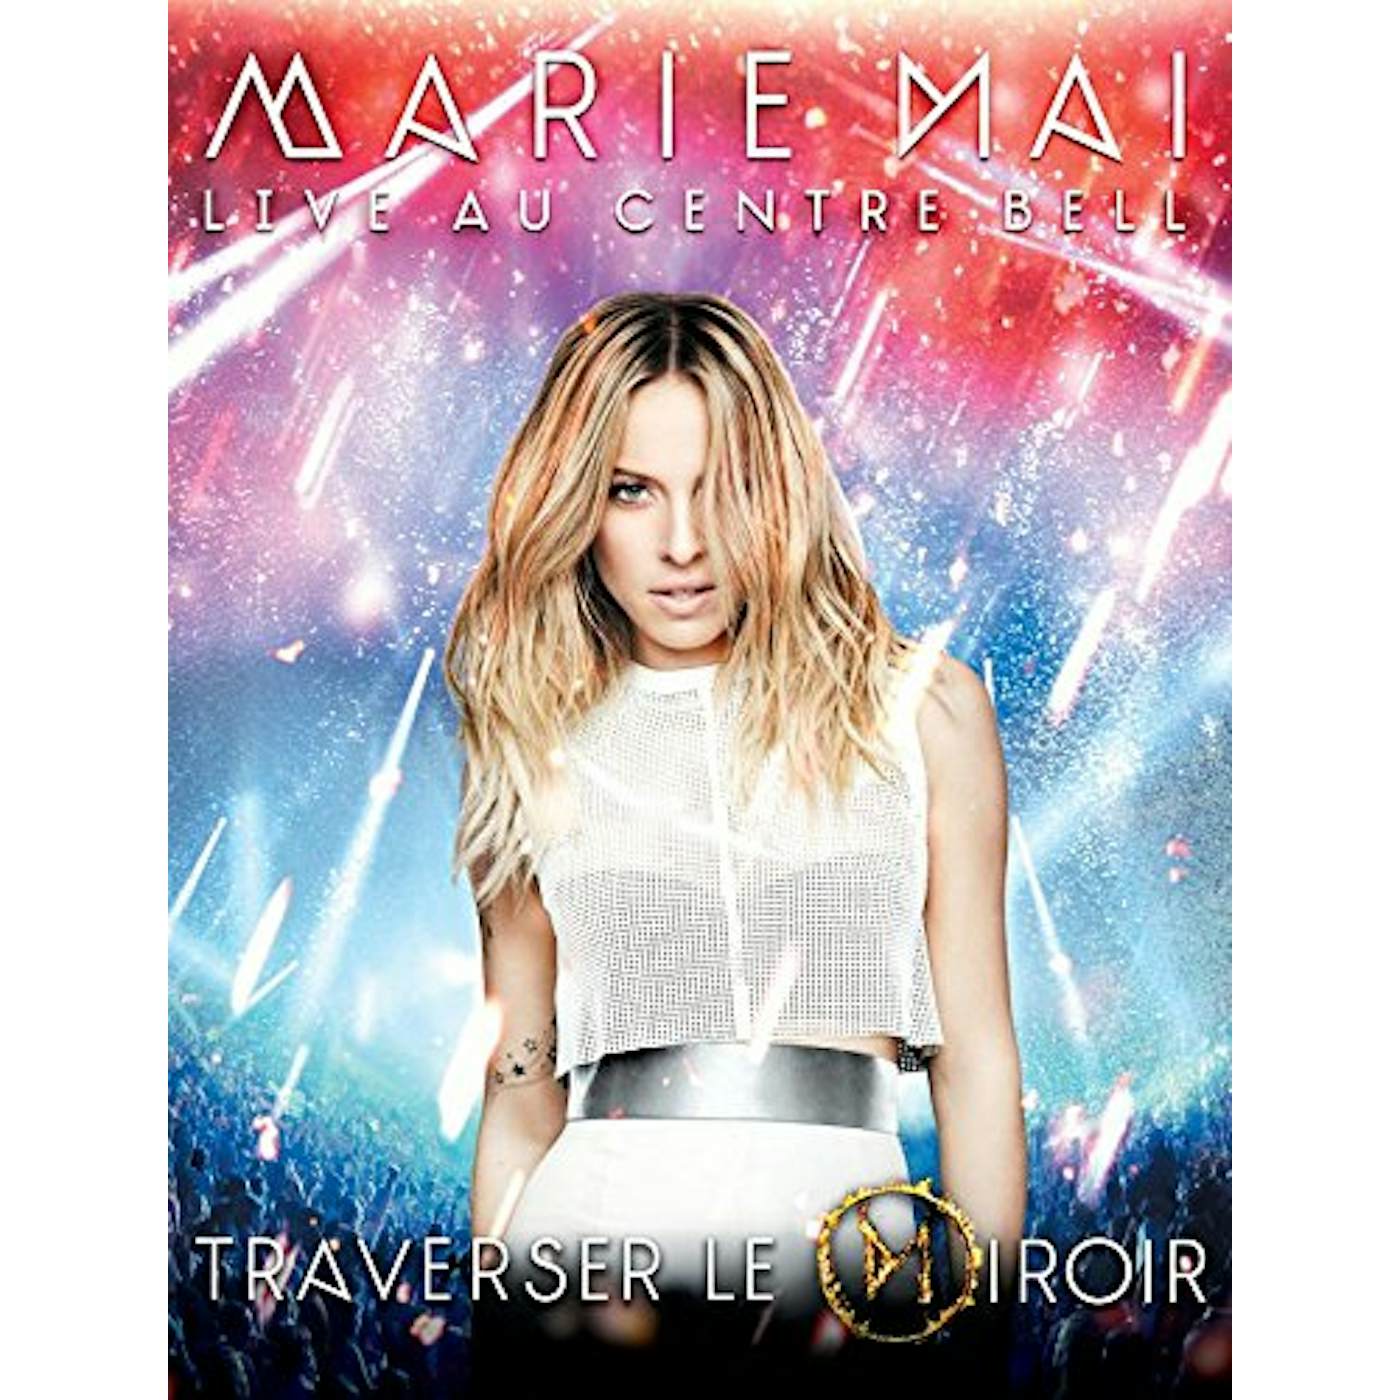 Marie-Mai MARIE MAI LIVE AU CENTRE BELL Blu-ray